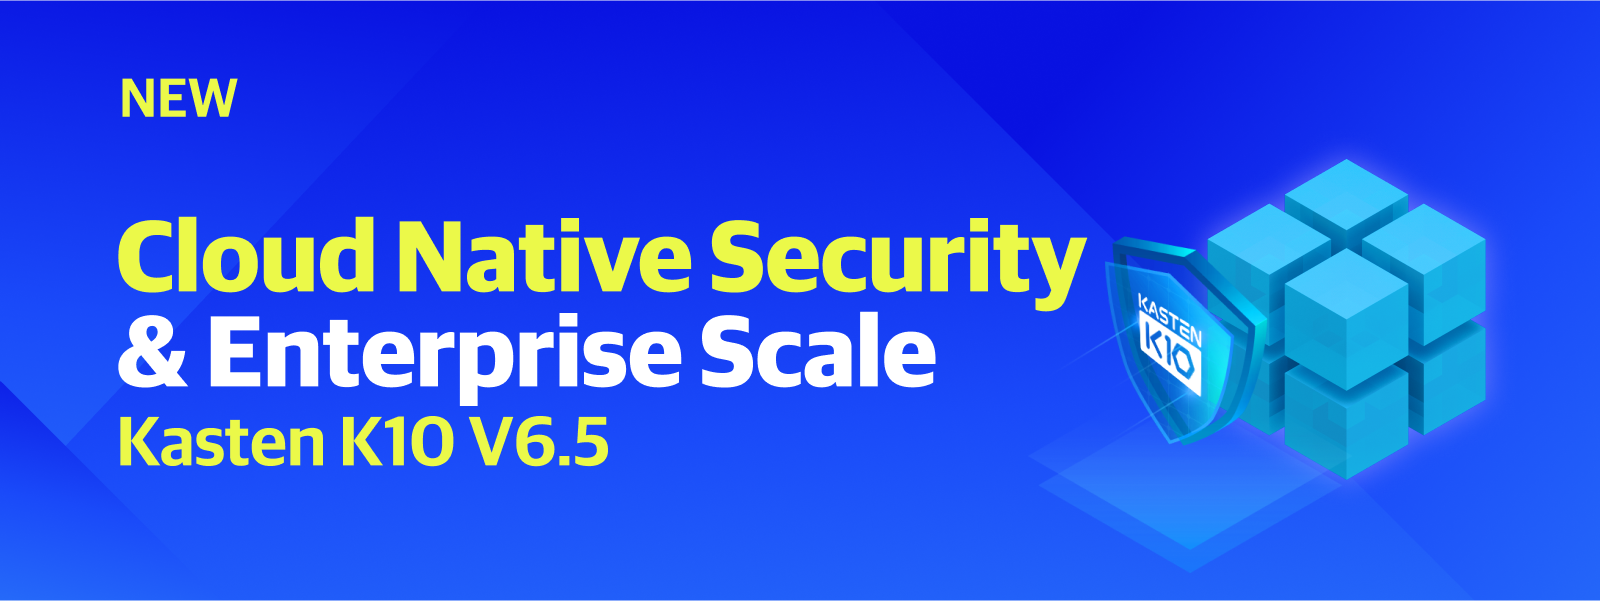 NLHero_CN  Security and Enterprise Scale-K10  3-1-1